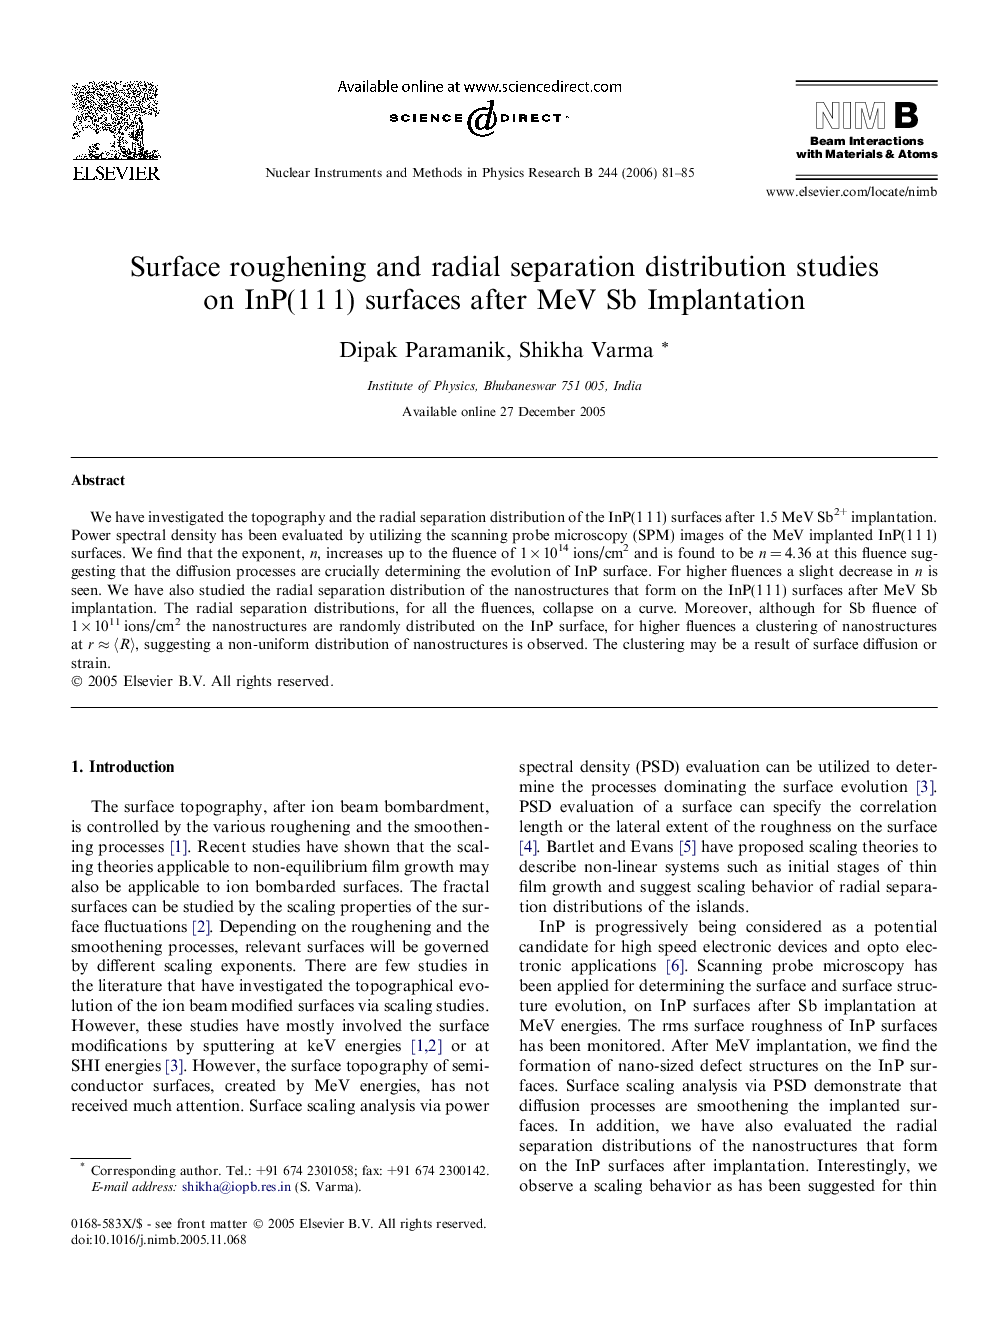 Surface roughening and radial separation distribution studies on InP(1Â 1Â 1) surfaces after MeV Sb Implantation